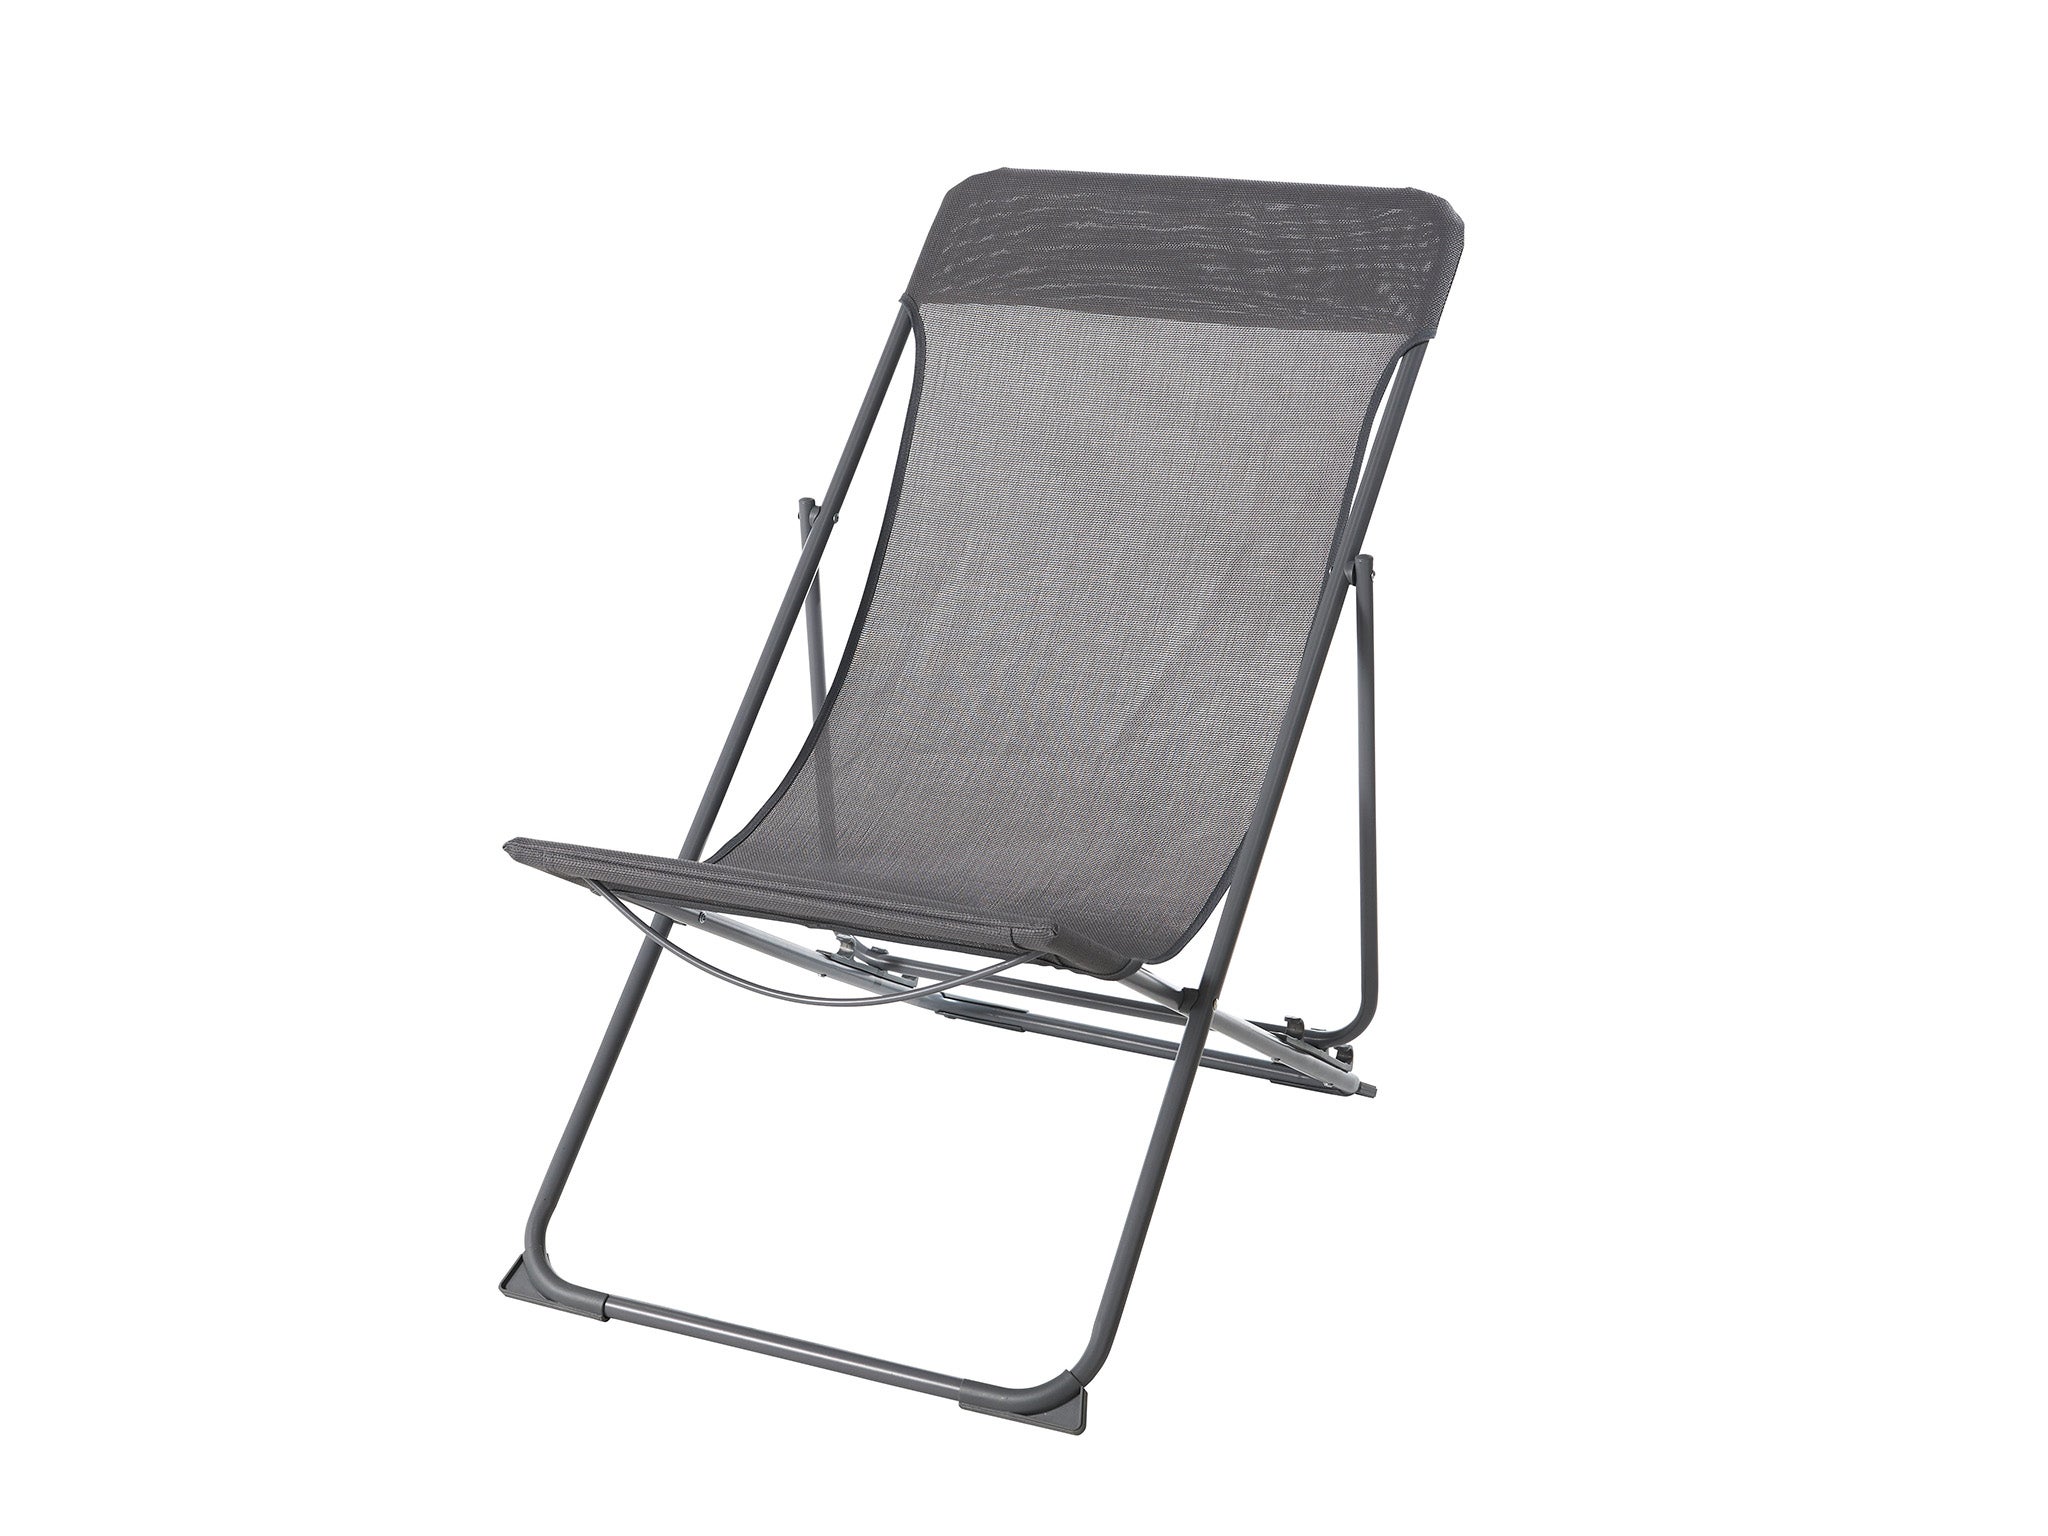 B&Q GoodHome Joline steel grey metal deckchair